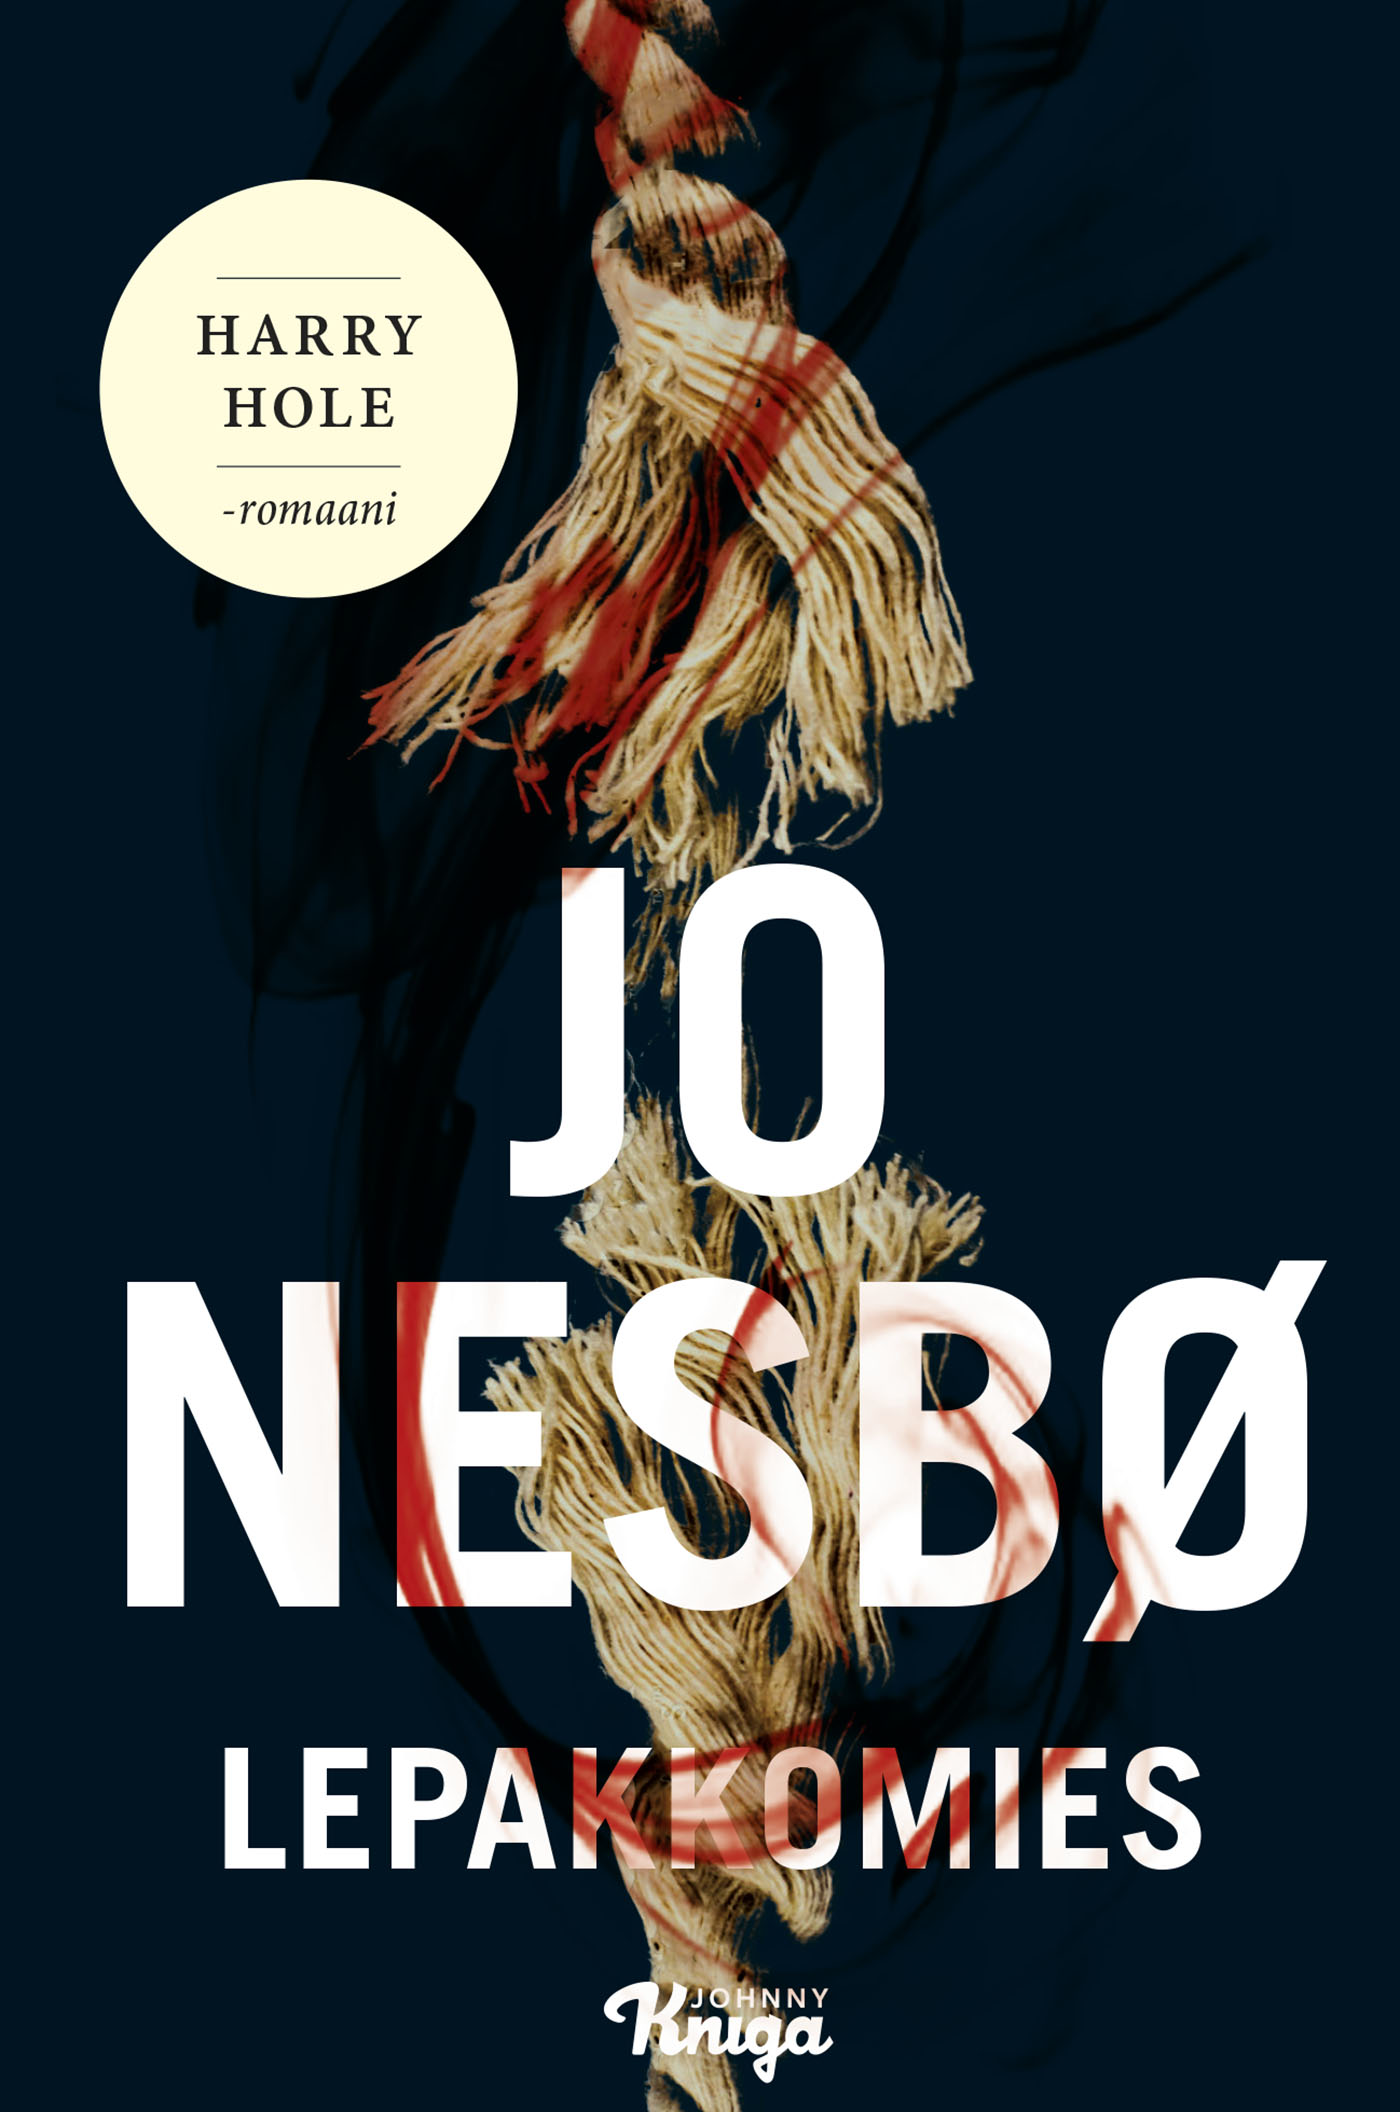 Nesbø, Jo - Lepakkomies: Harry Hole 1, ebook